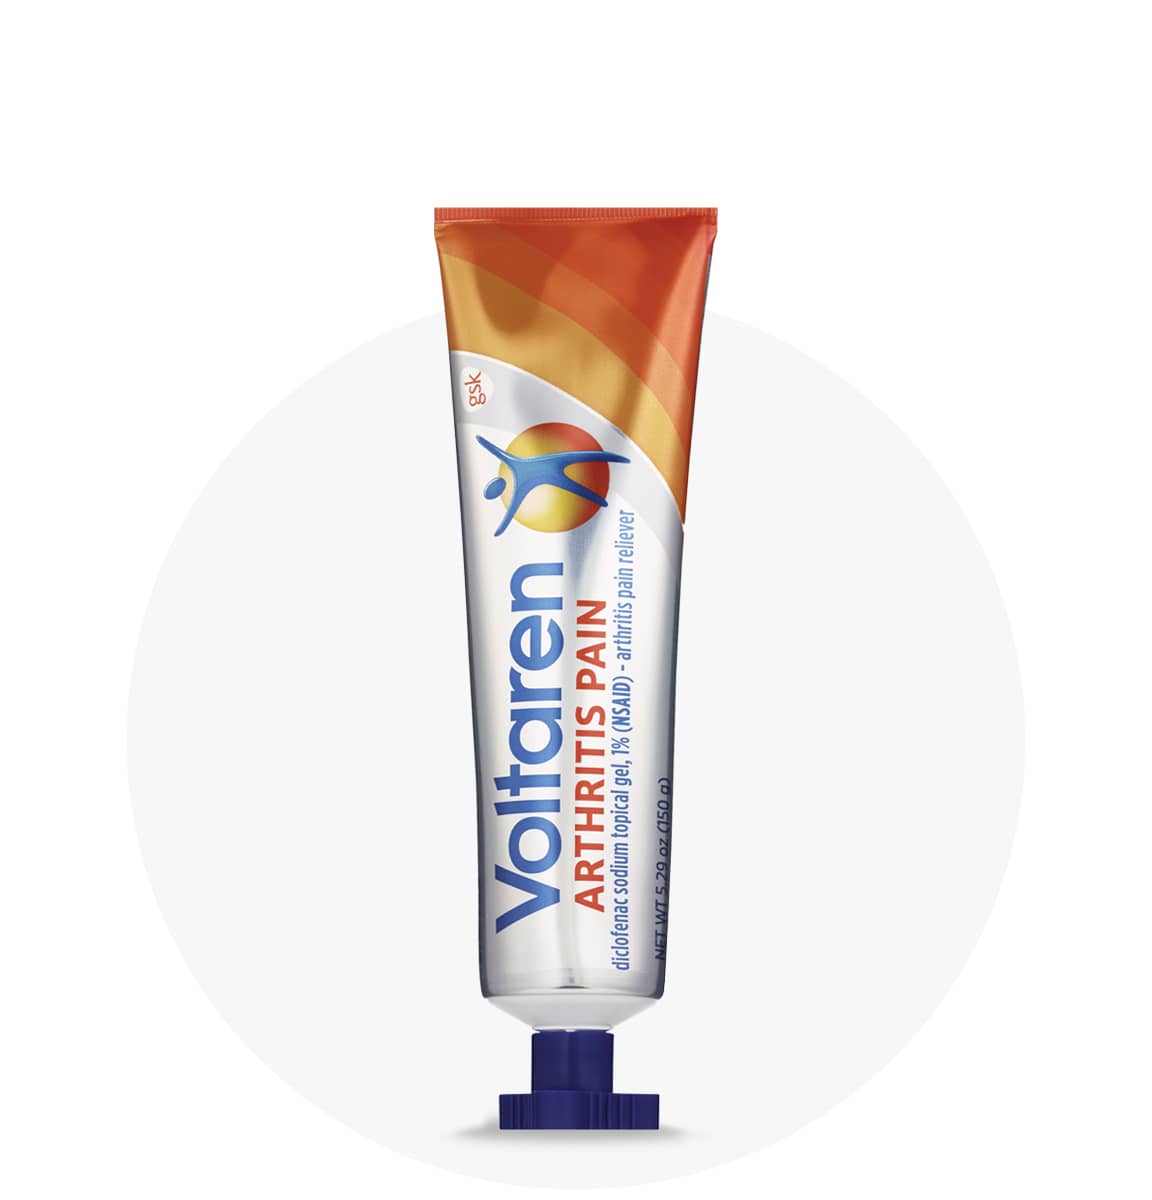 A tube of Voltaren® brand Arthritis Pain Relief Gel 